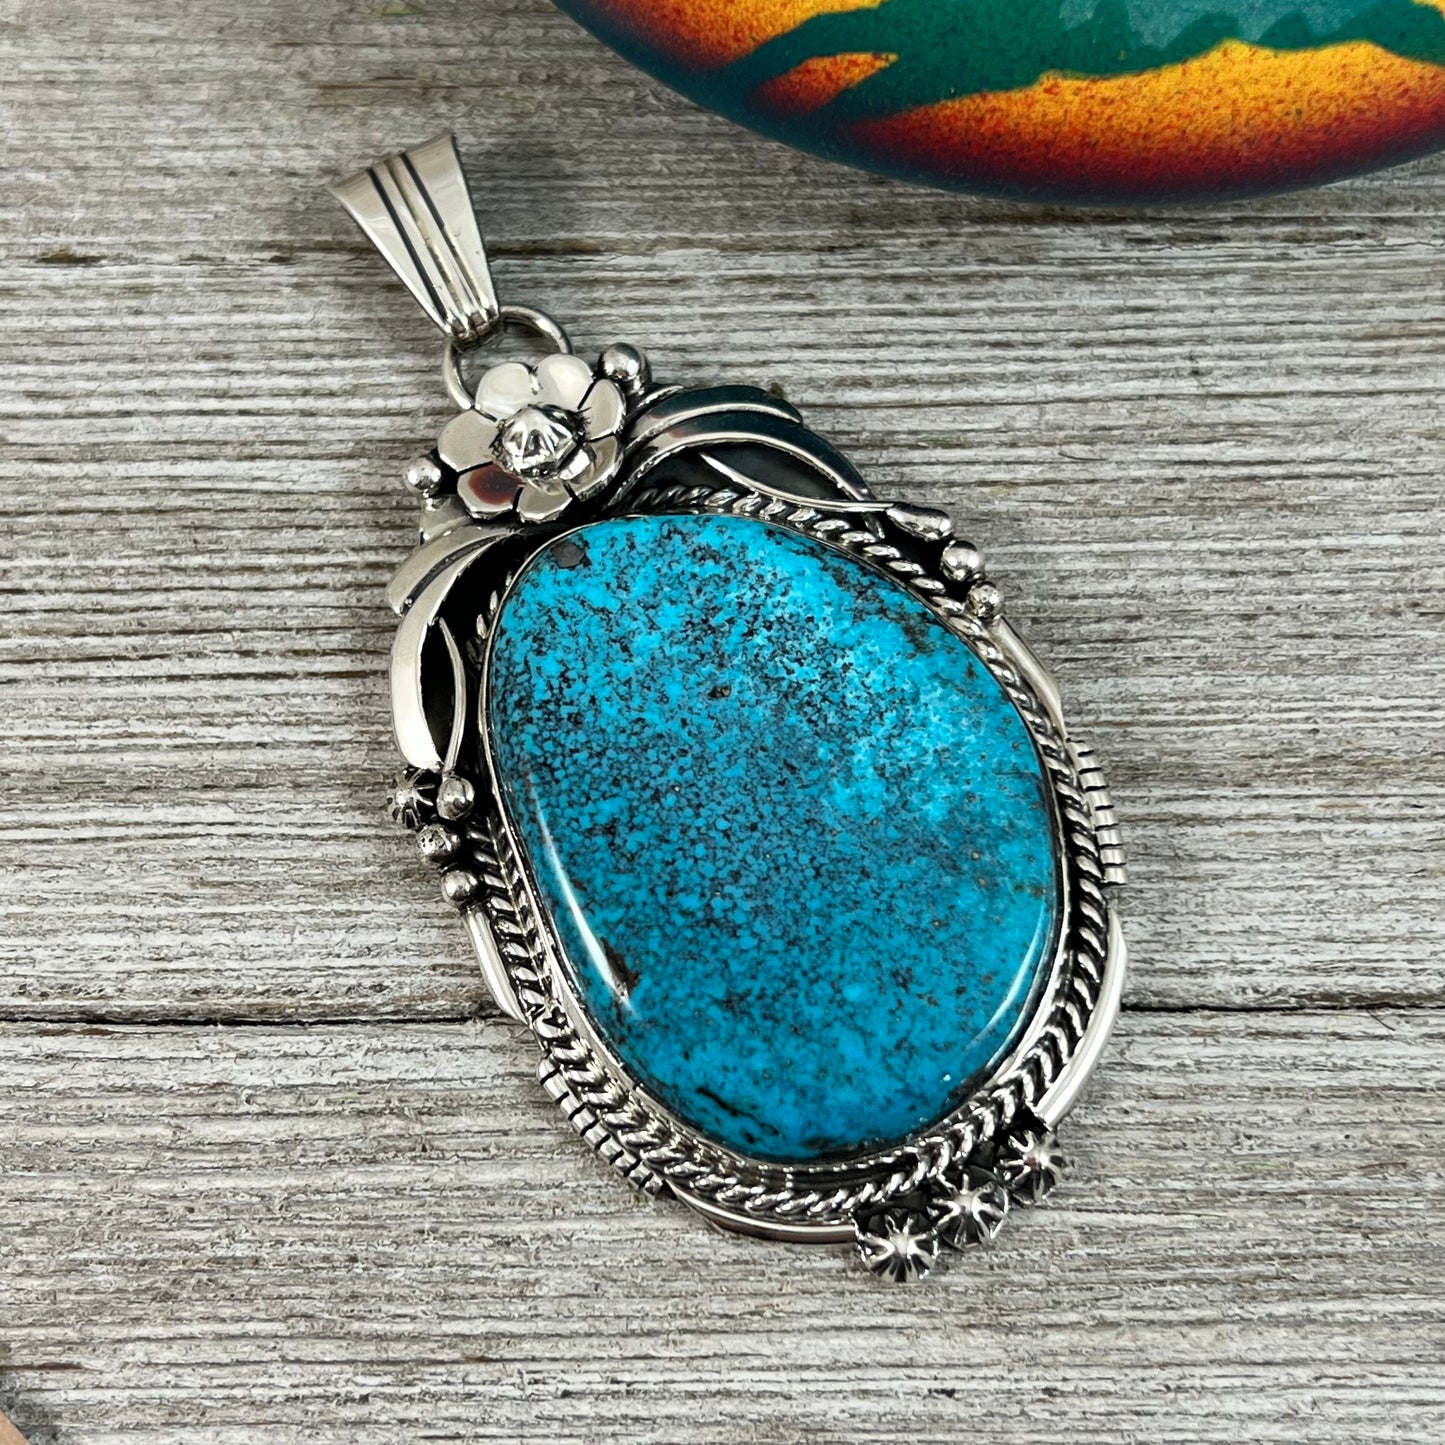 XL extra large, Blue Kingman turquoise pendant #2, Navajo handmade Rita Long, sterling silver, signed